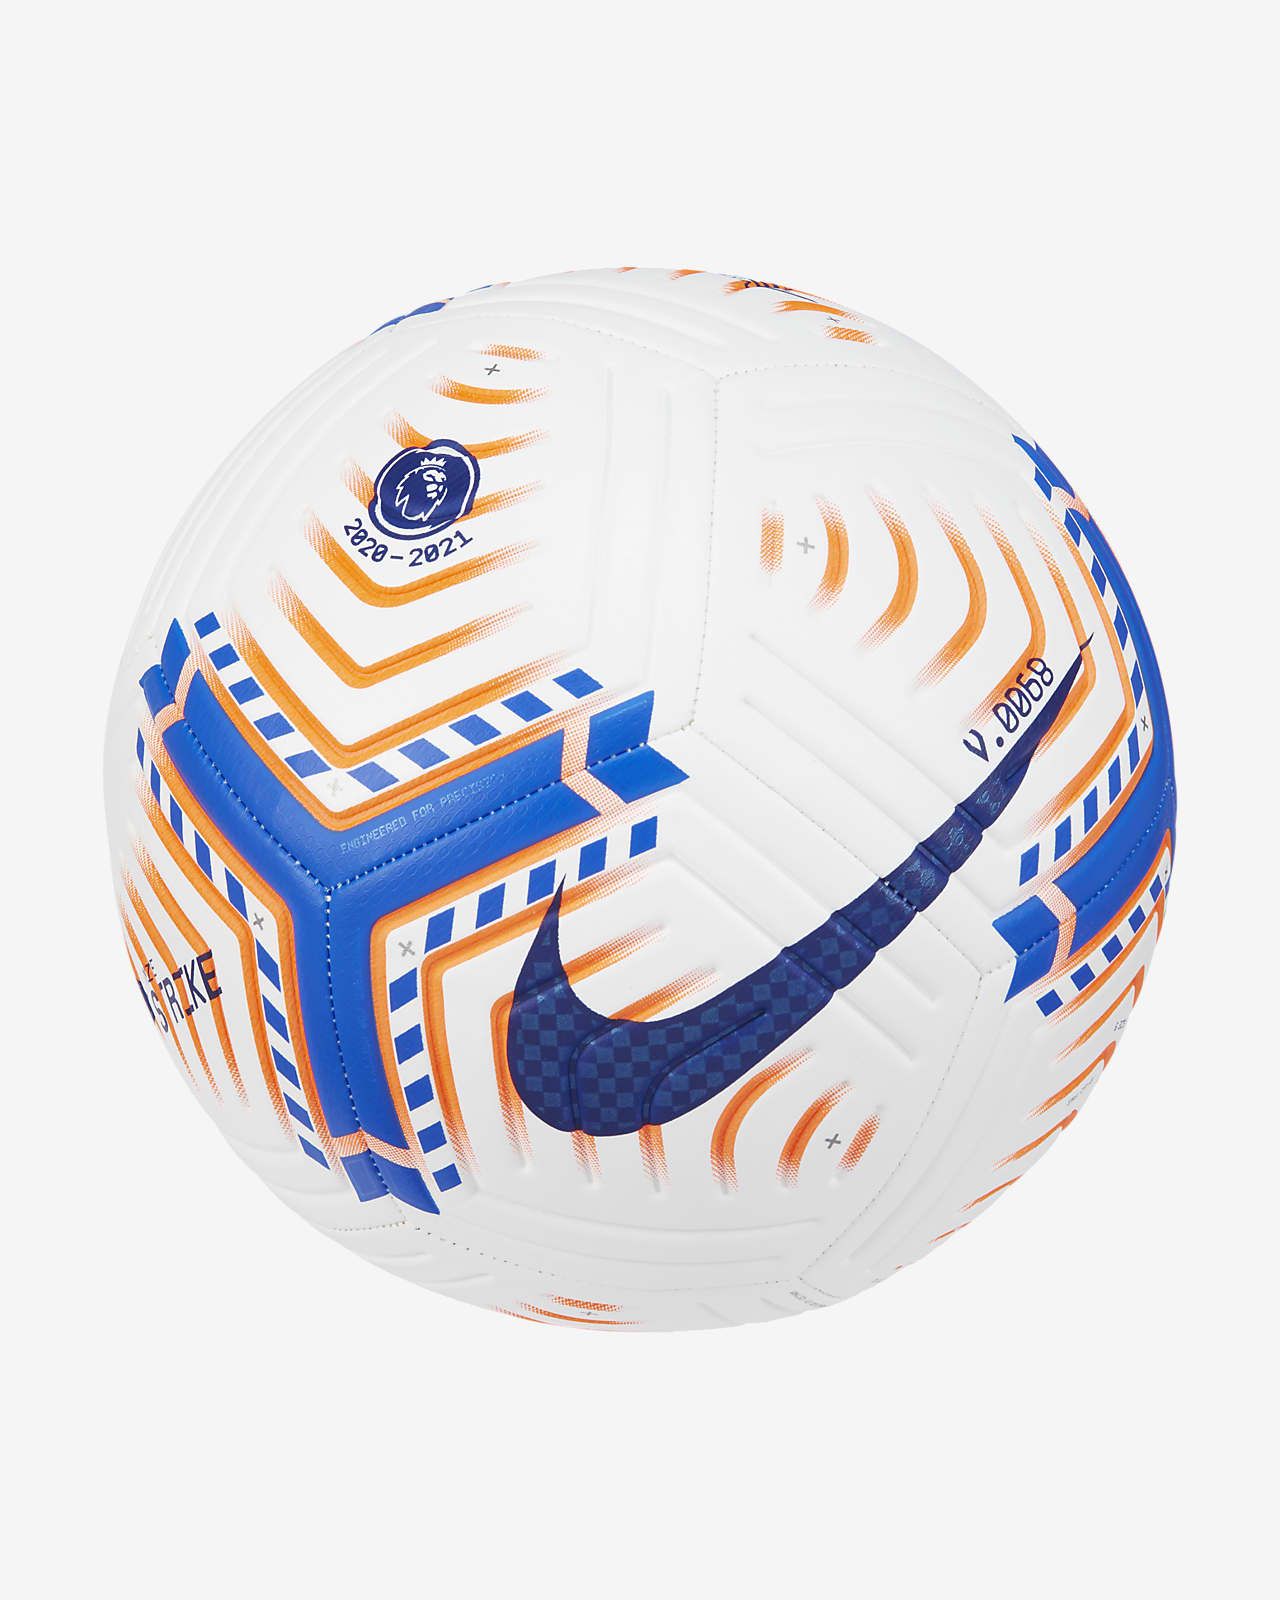 nike cr7 strike soccer ball size 4